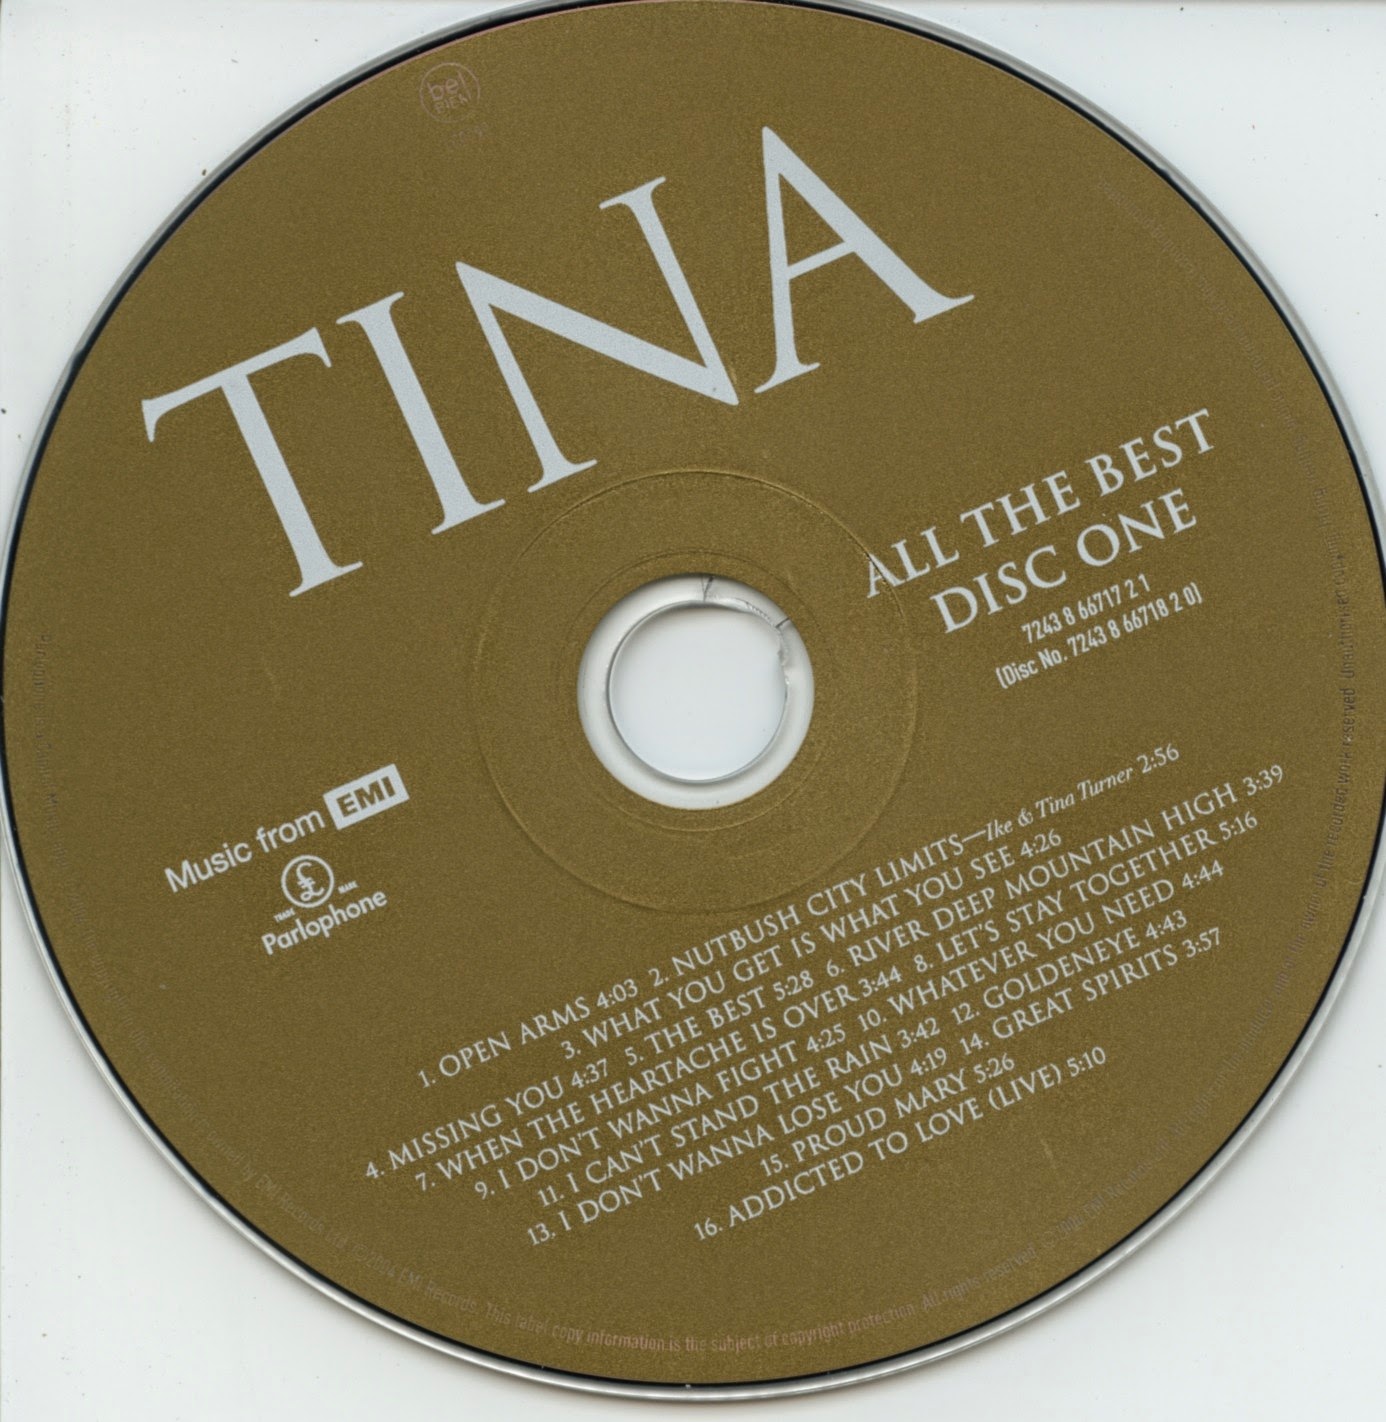 Turner simply the best. Tina Turner 2000. Tina Turner - (all the best) - 2010г. Tina Turner 1963. Tina Turner – simply the best CD.